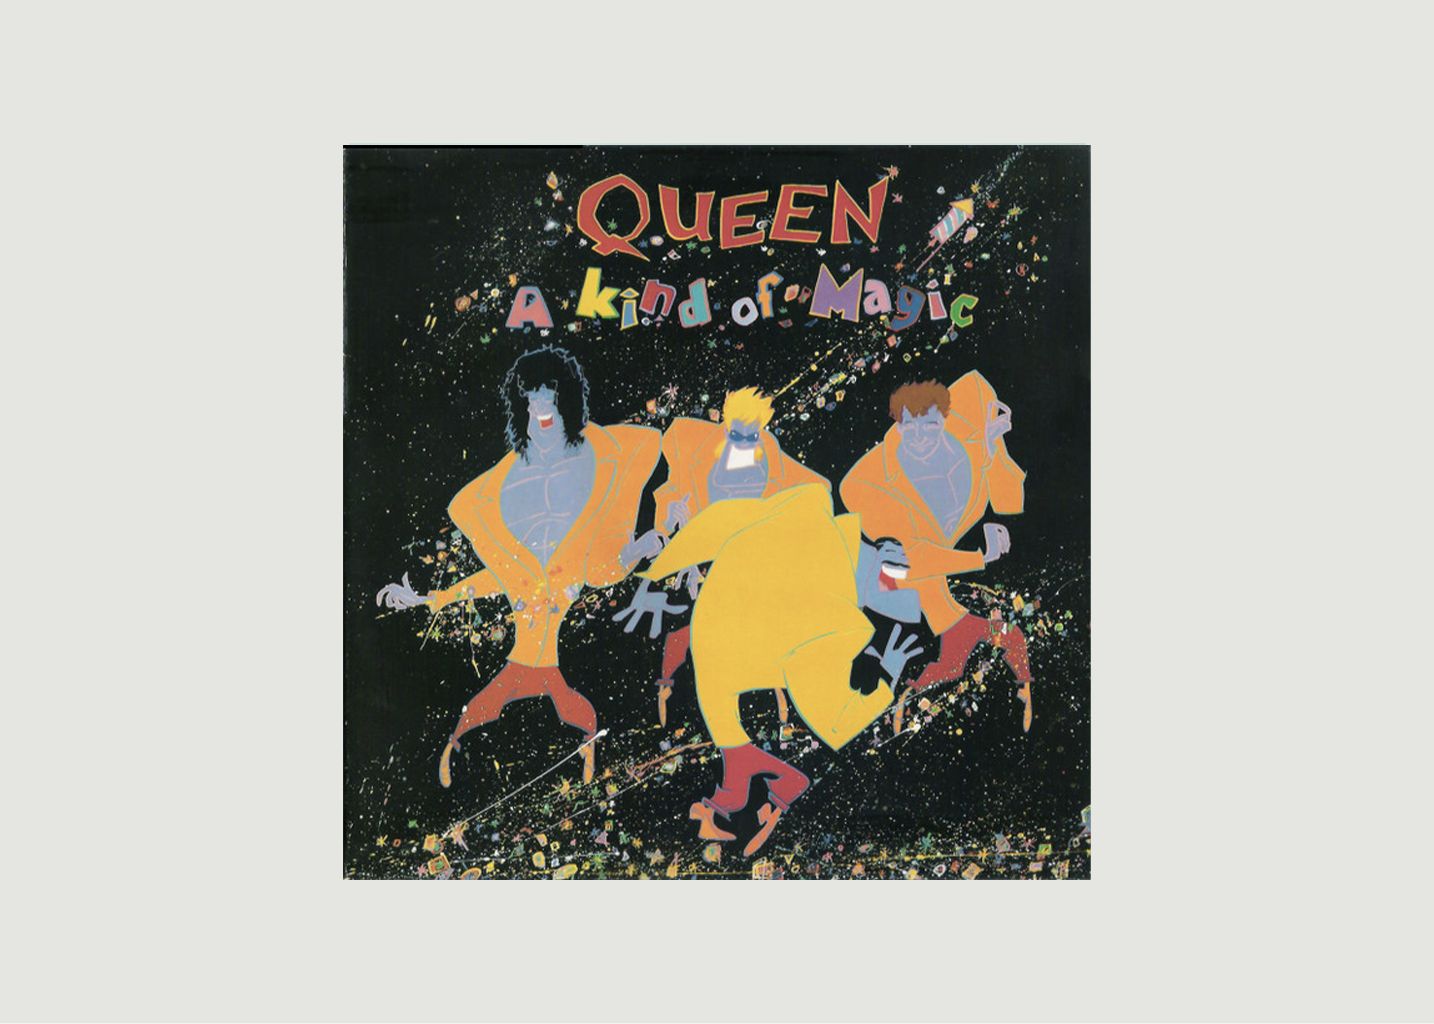 Vinyle A Kind Of Magic Queen - La vinyl-thèque idéale